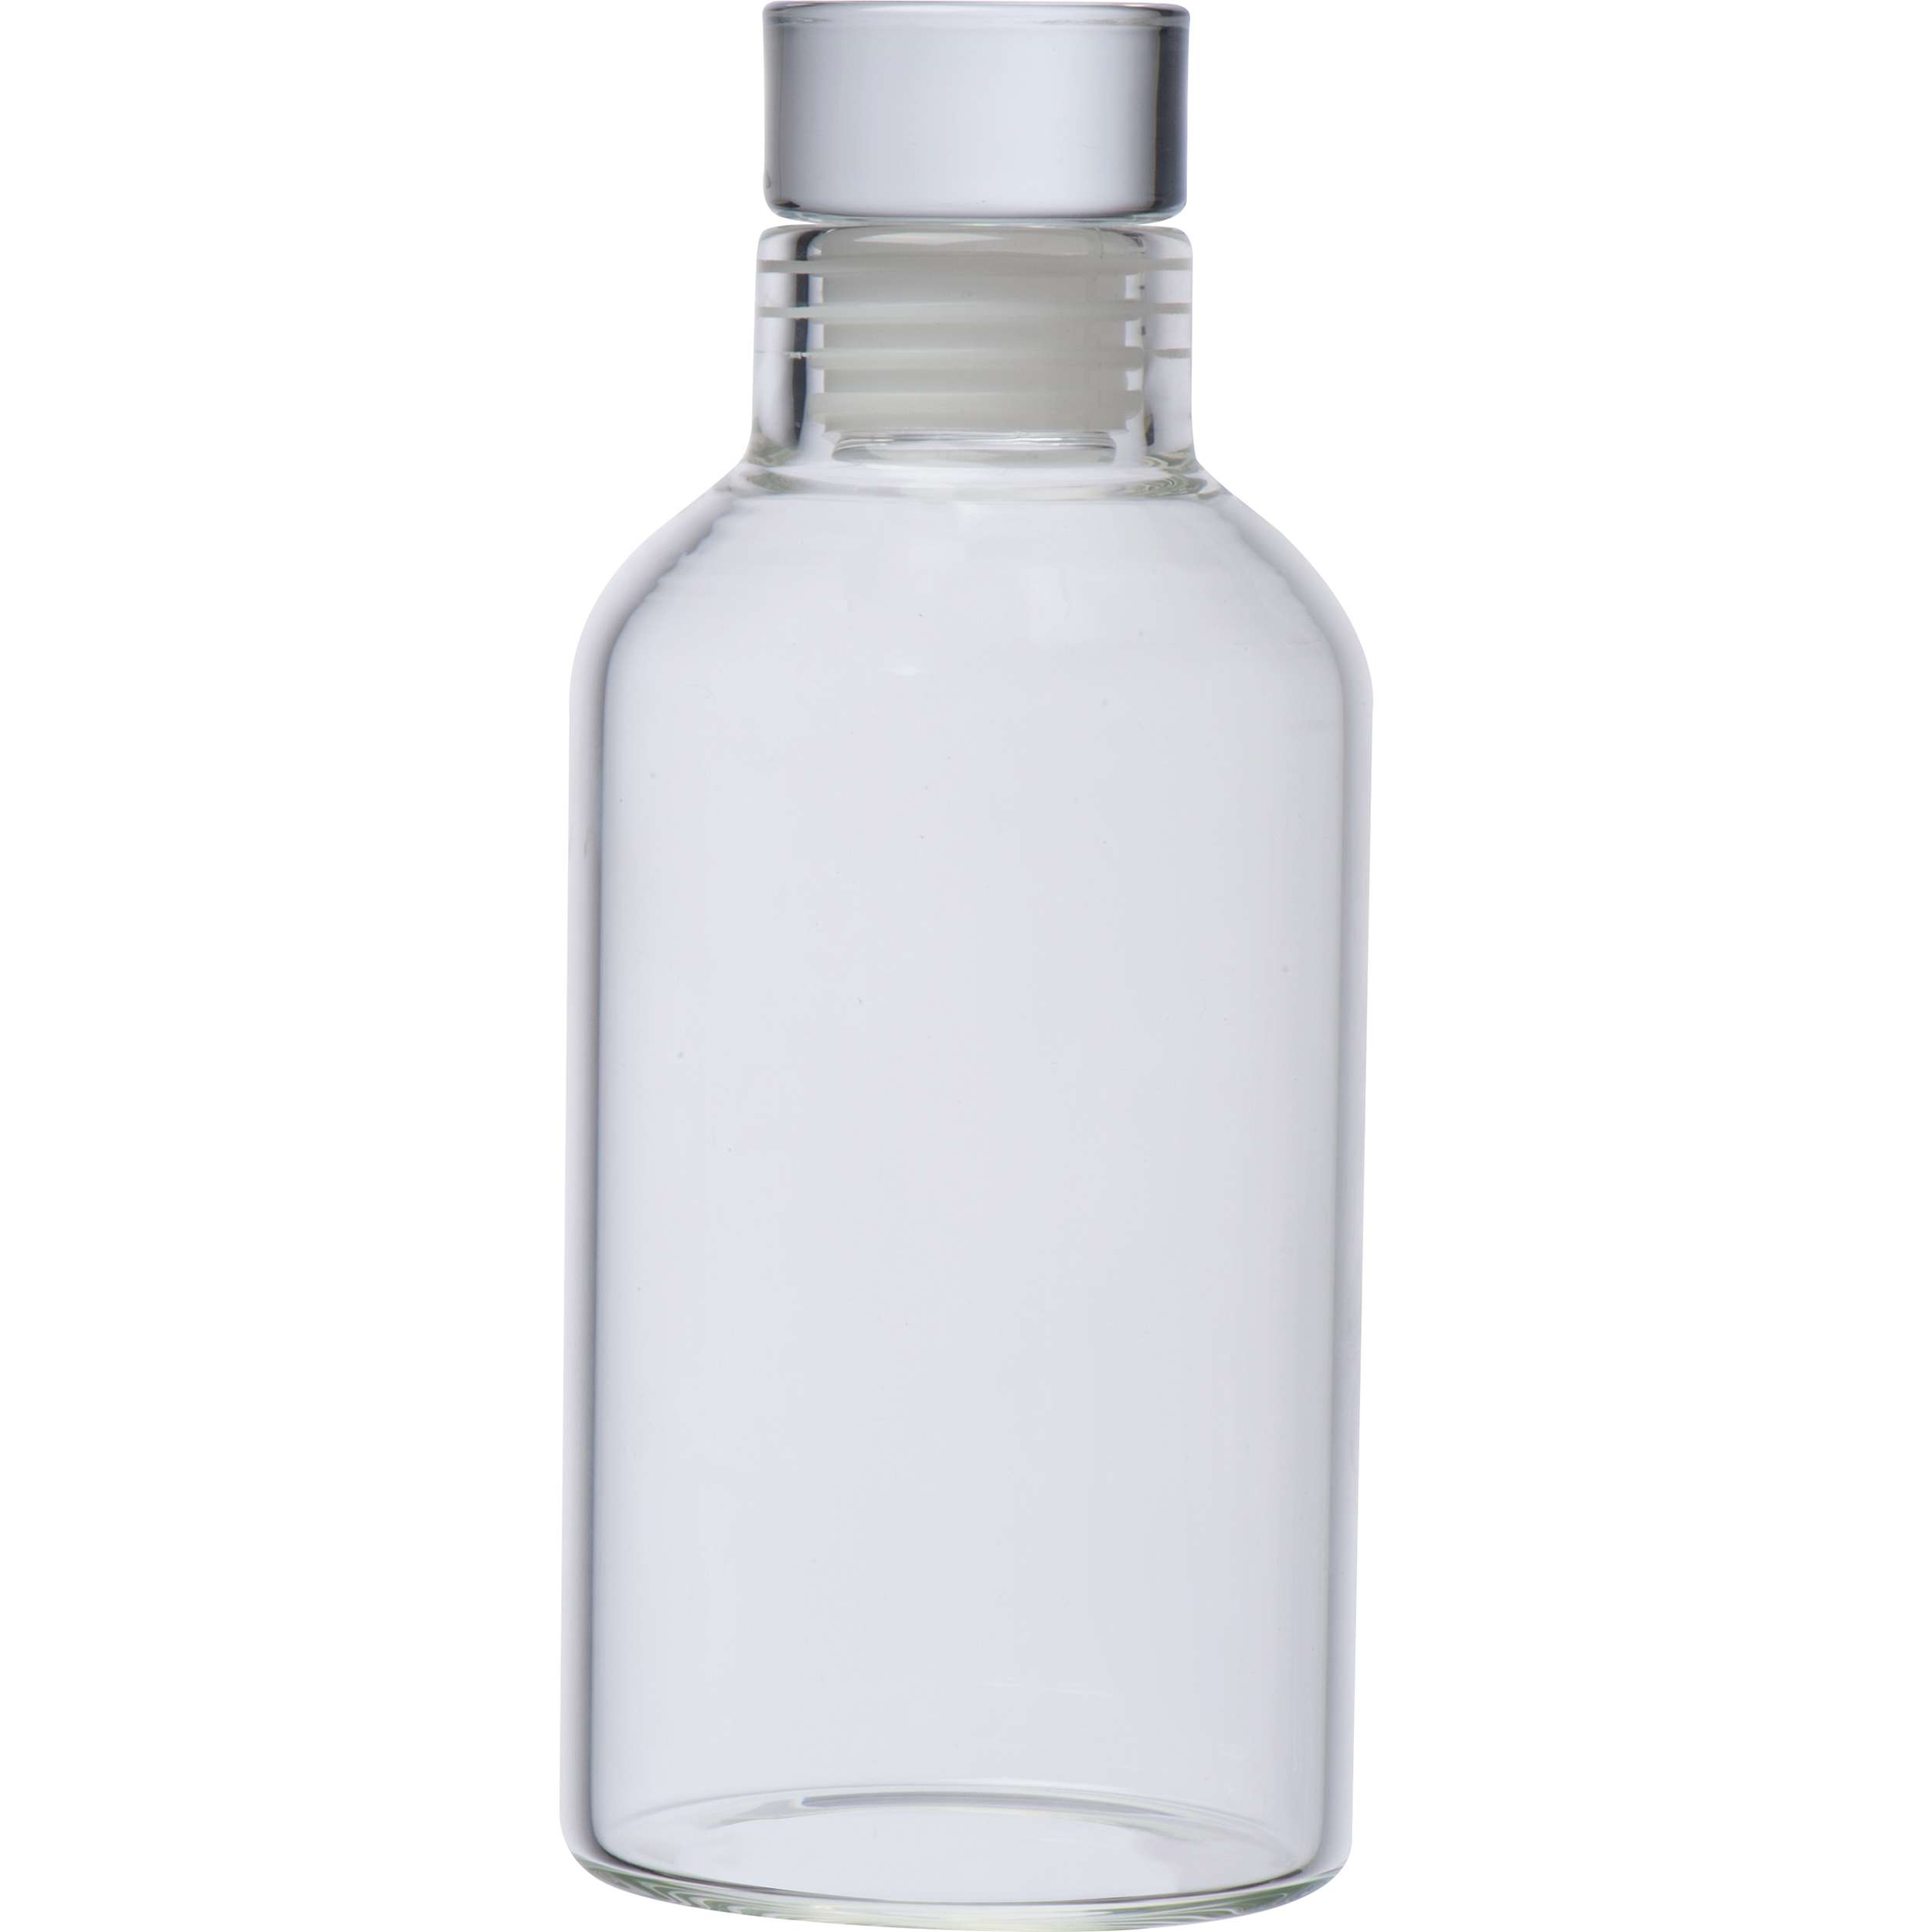 Glass drinking bottle, 300 ml